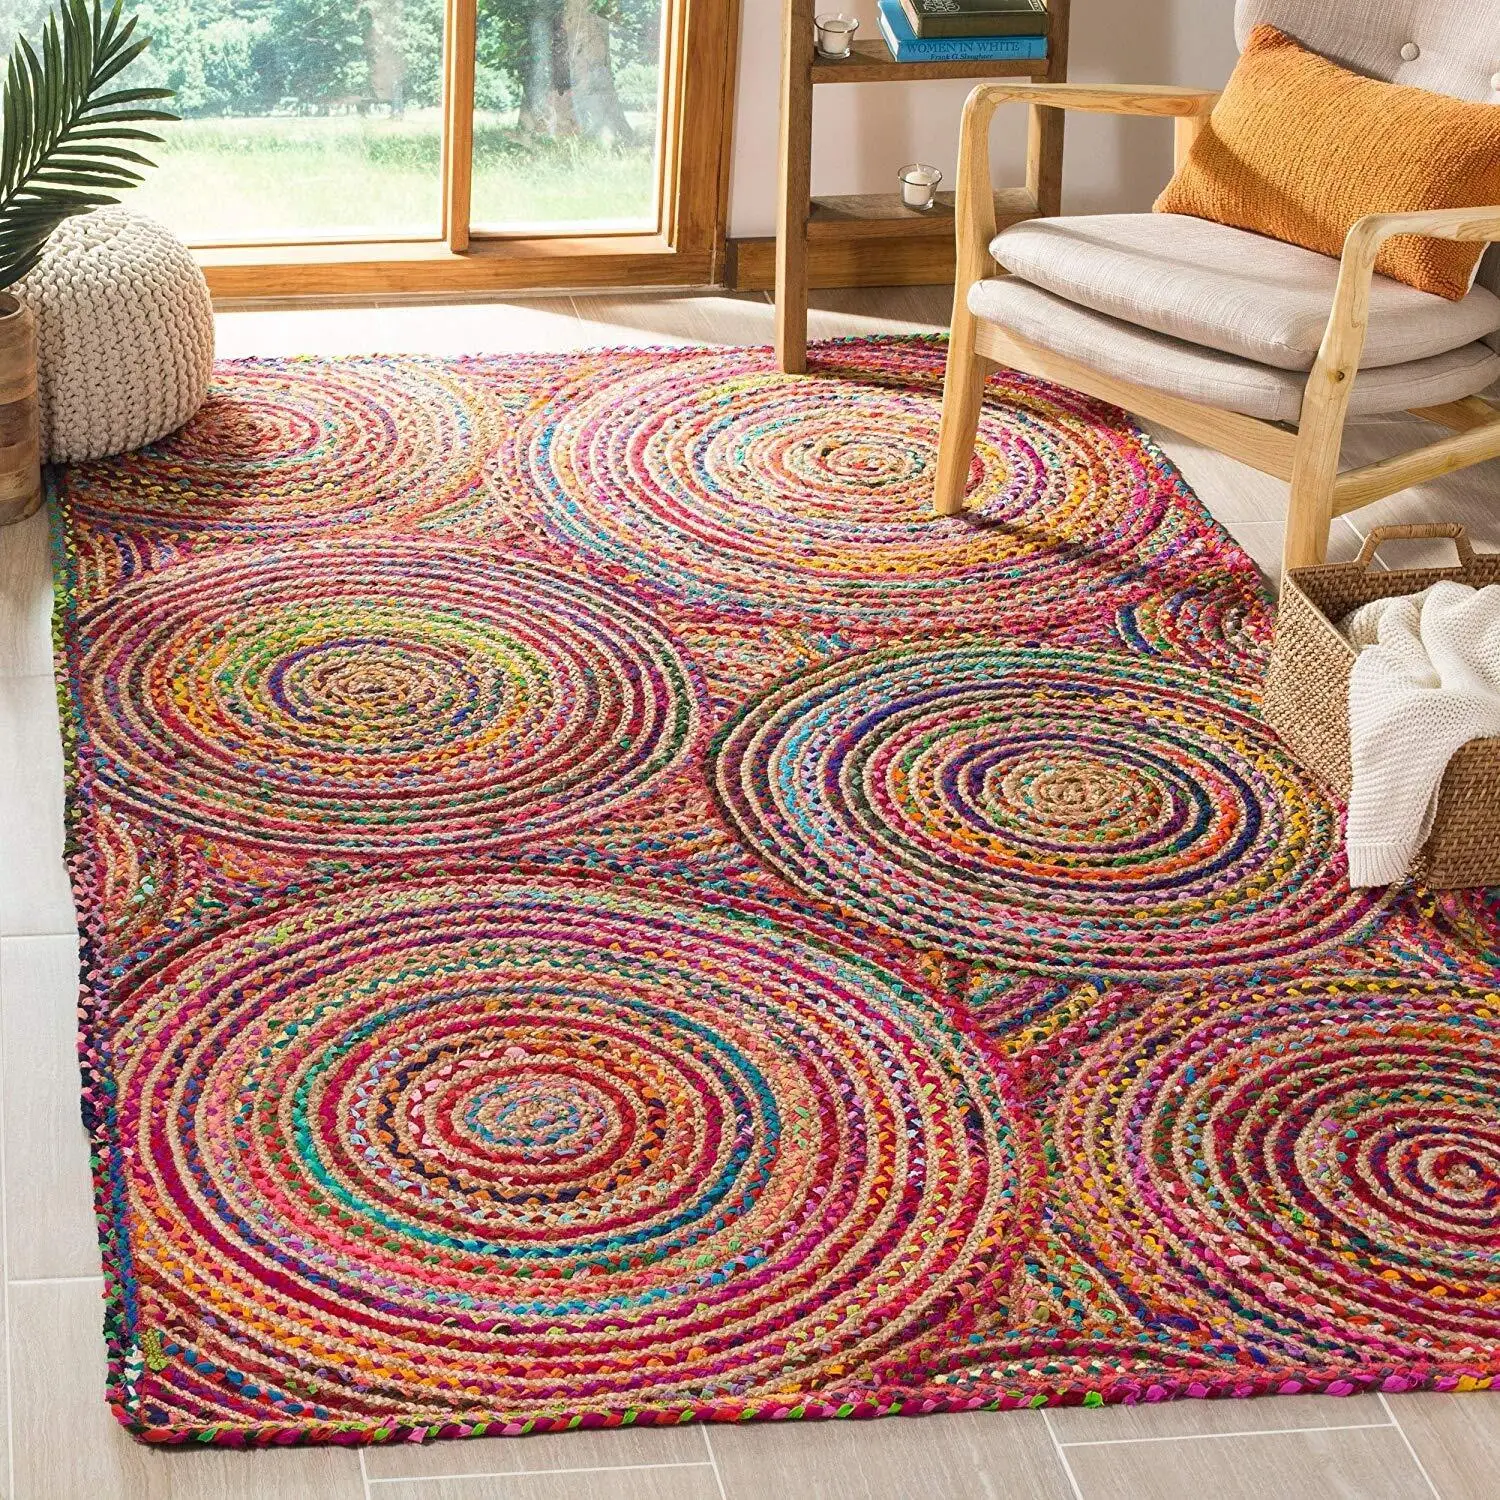 Rugs for Bedroom Indian Beautiful Handmade Carpet Braided Bohemian Jute Rug Home Decor Rugs Floor Rug Home Decor 5